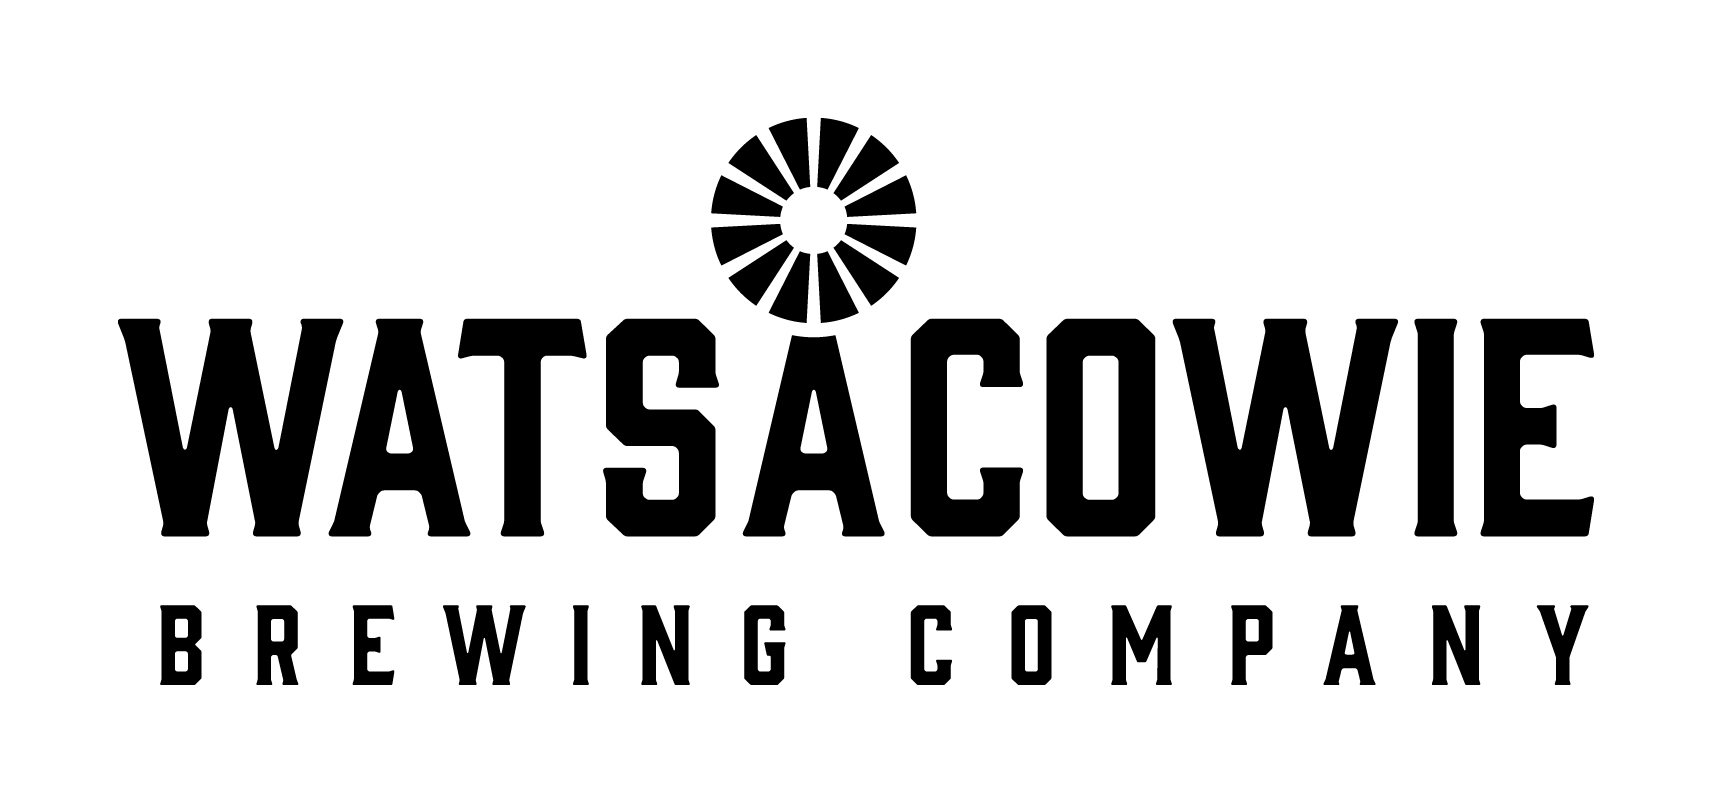 Watsacowie Brewing Company